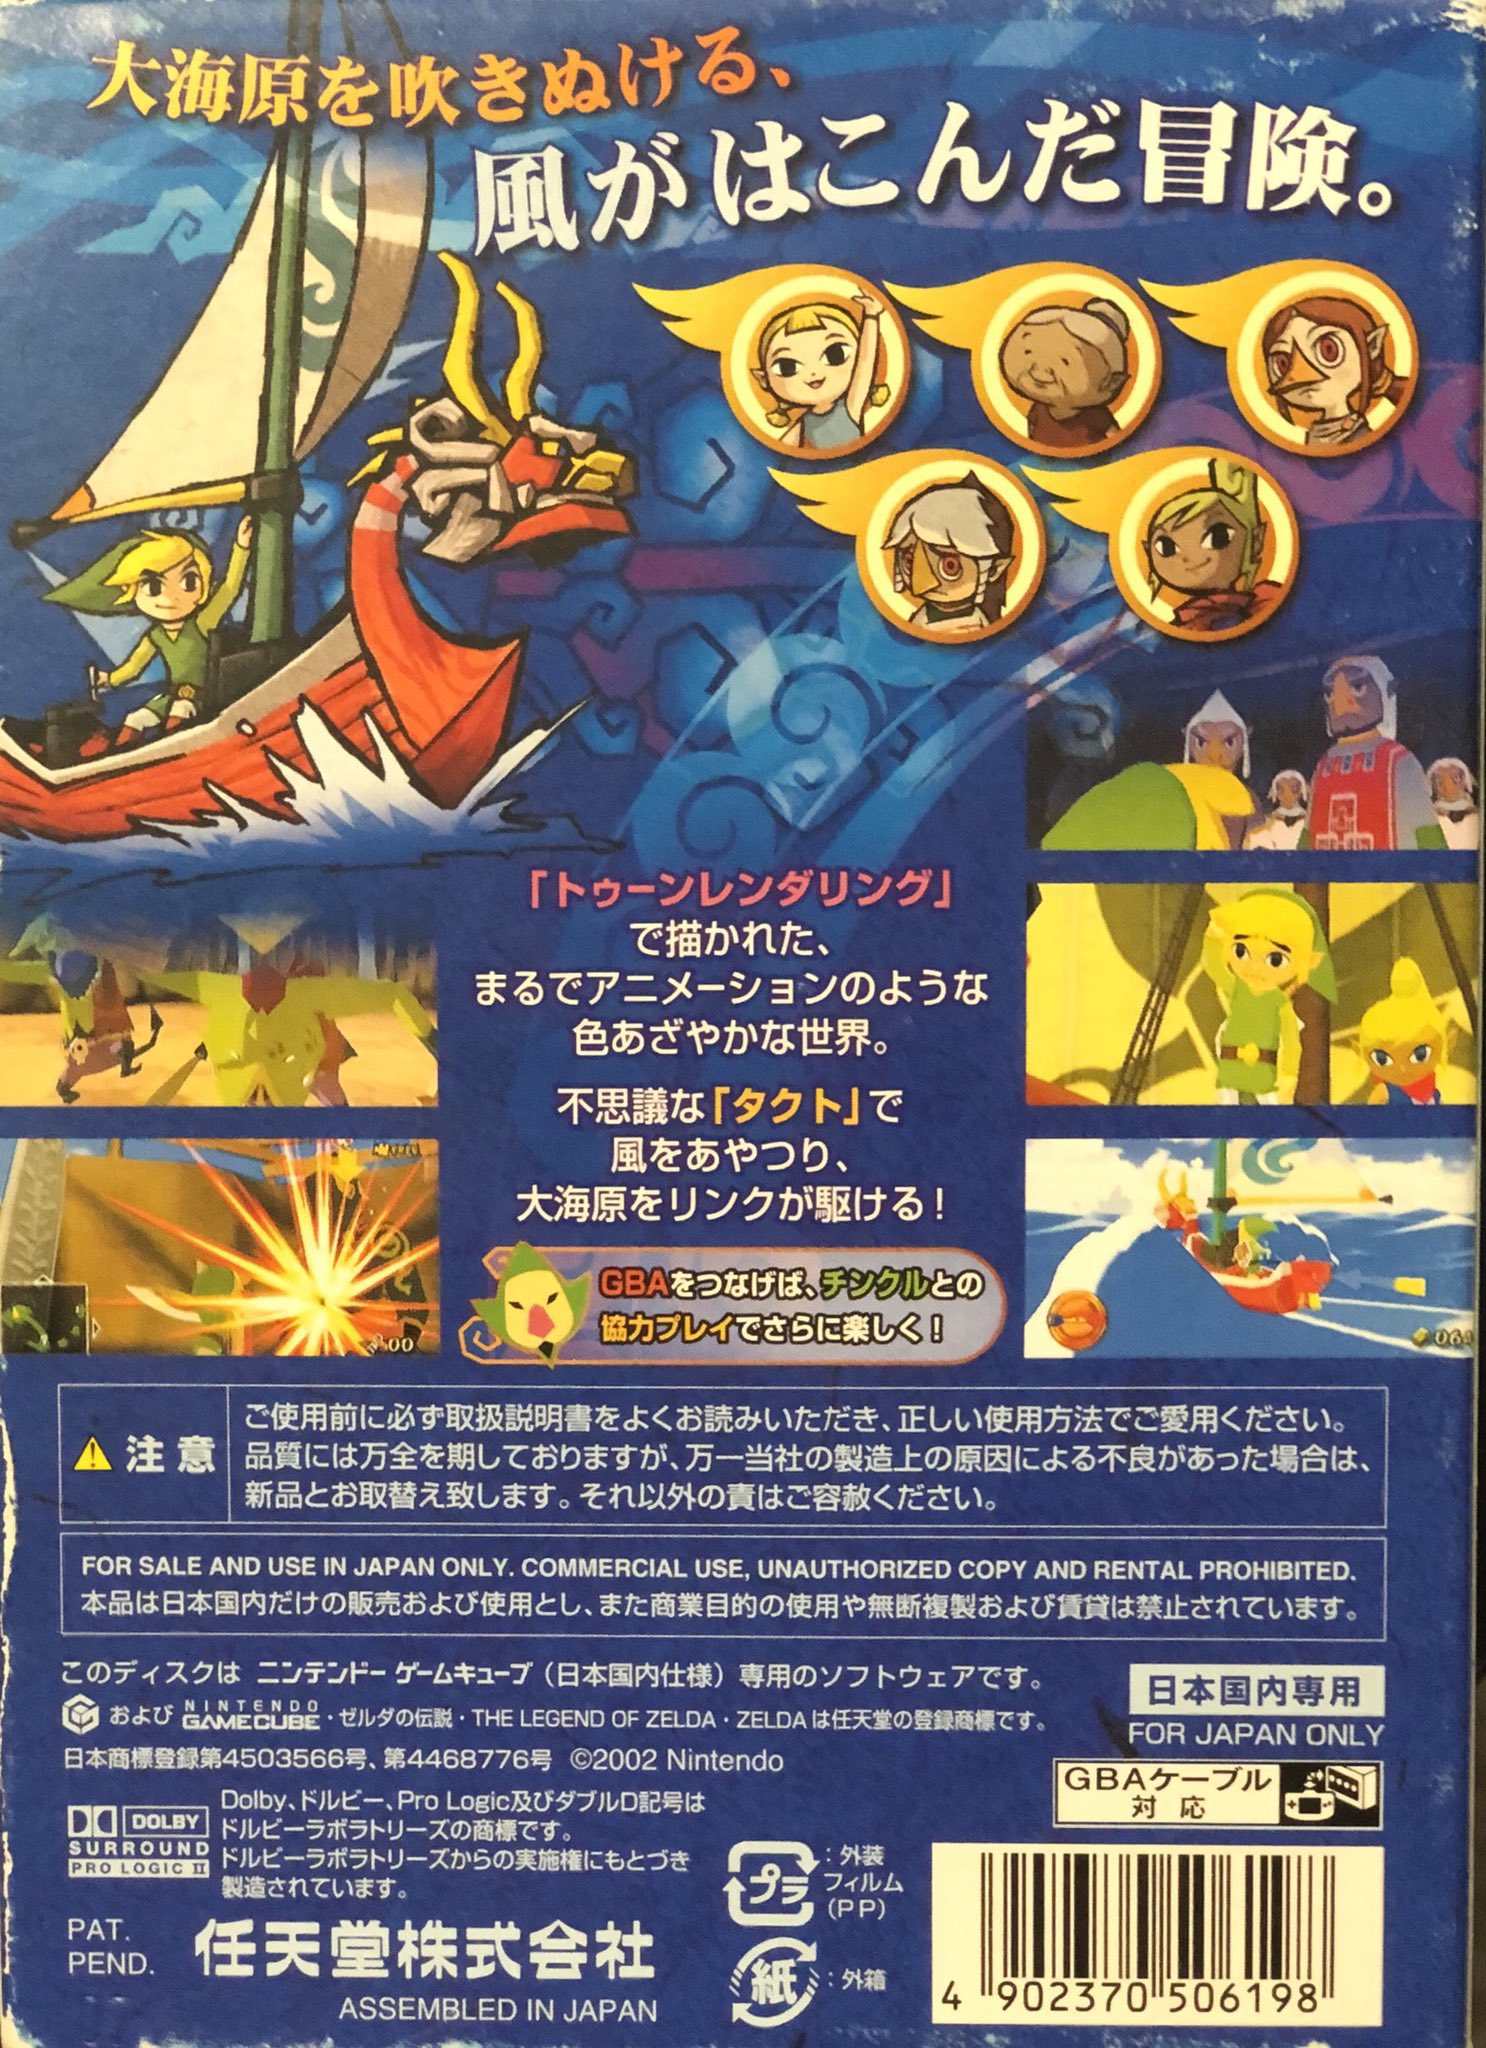 Nintendo Game Cube The Legend of Zelda The Wind Waker Japanese ver